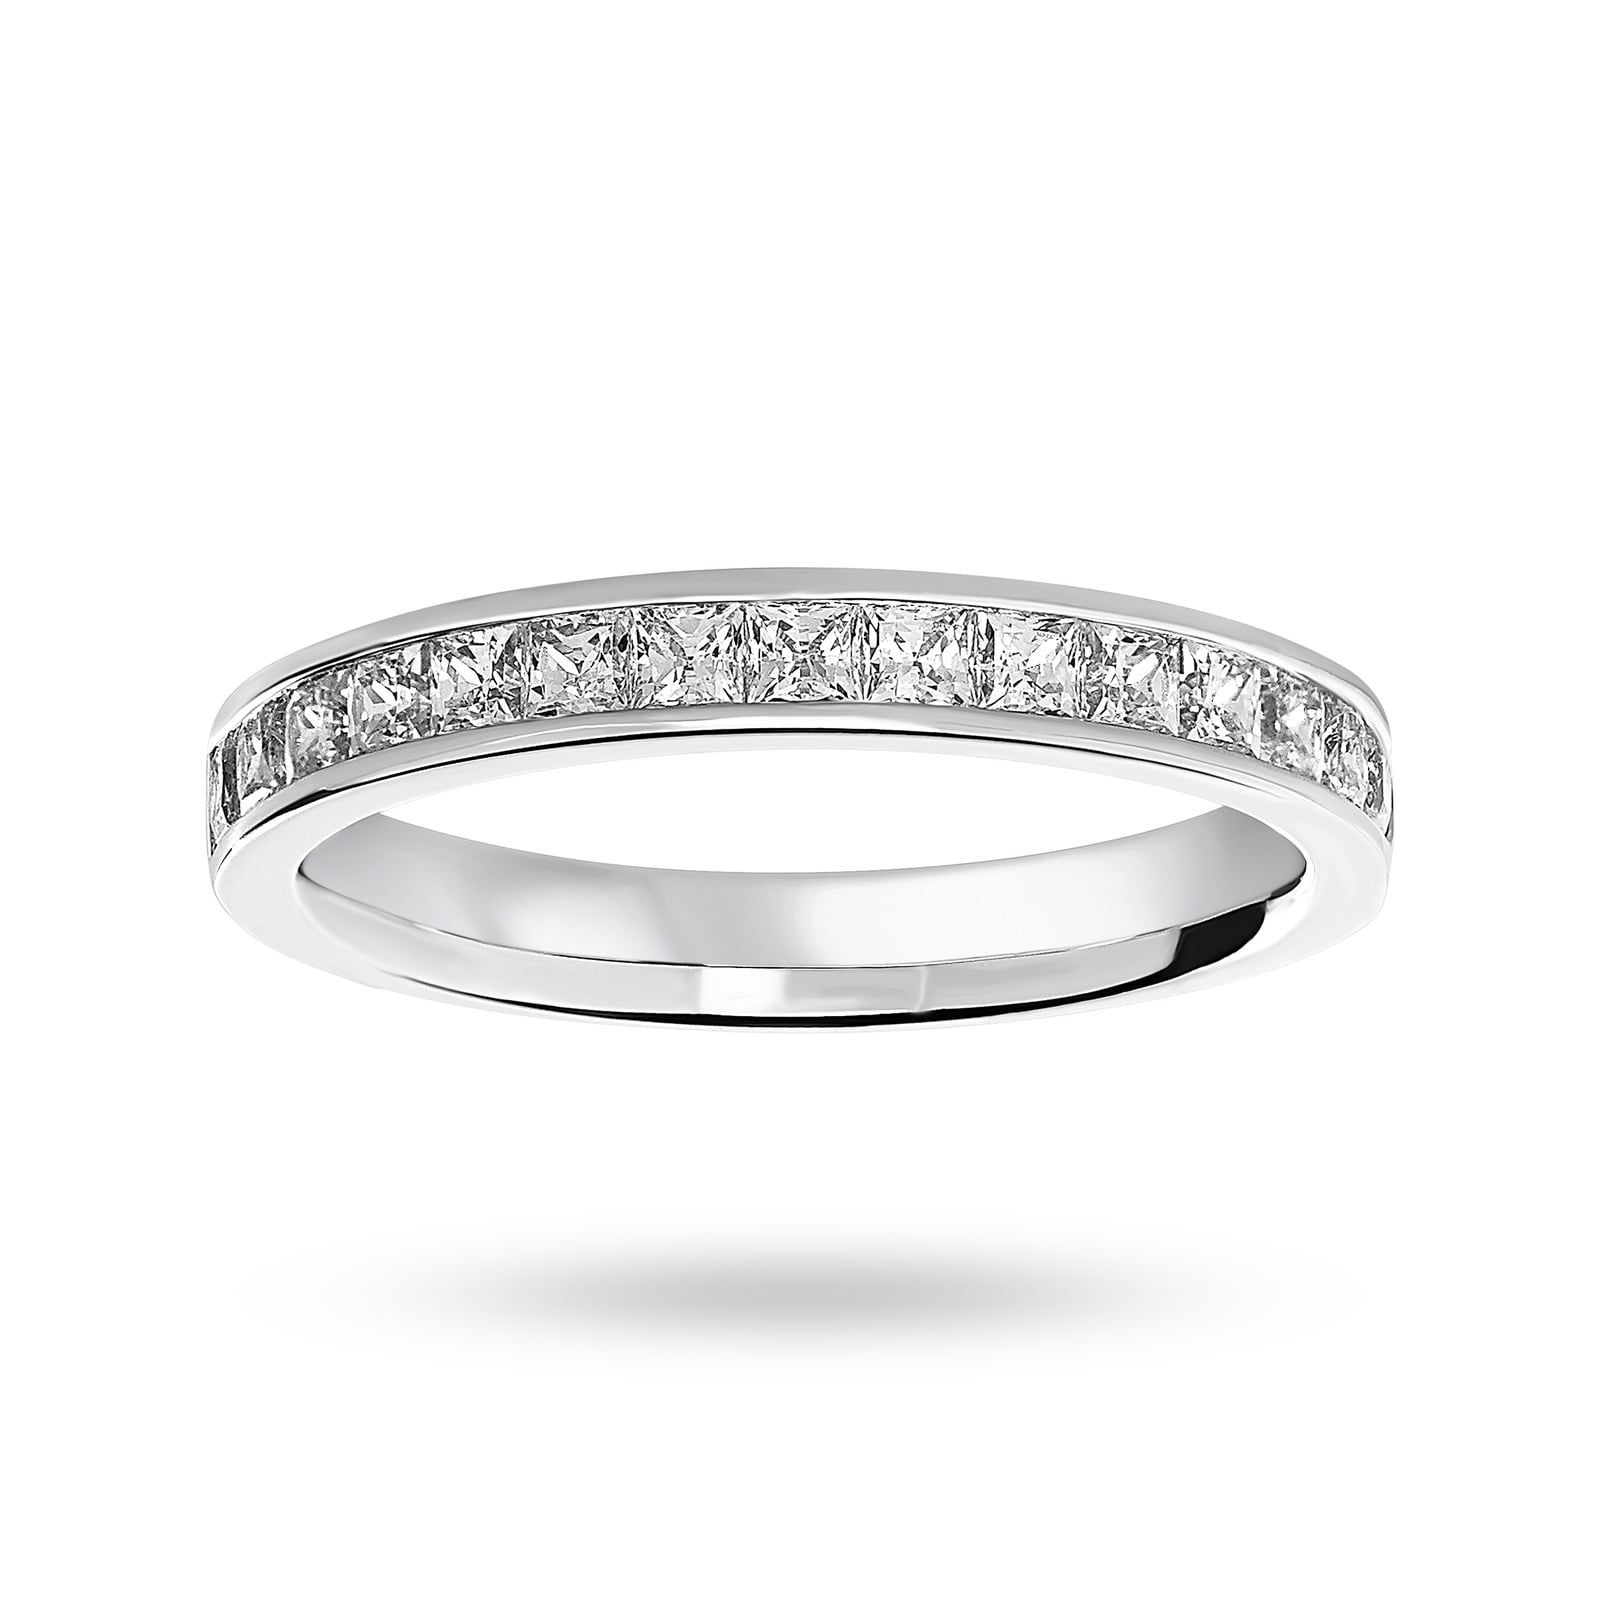 Platinum 0.75 Carat Princess Cut Half Eternity Ring - Ring Size J.5